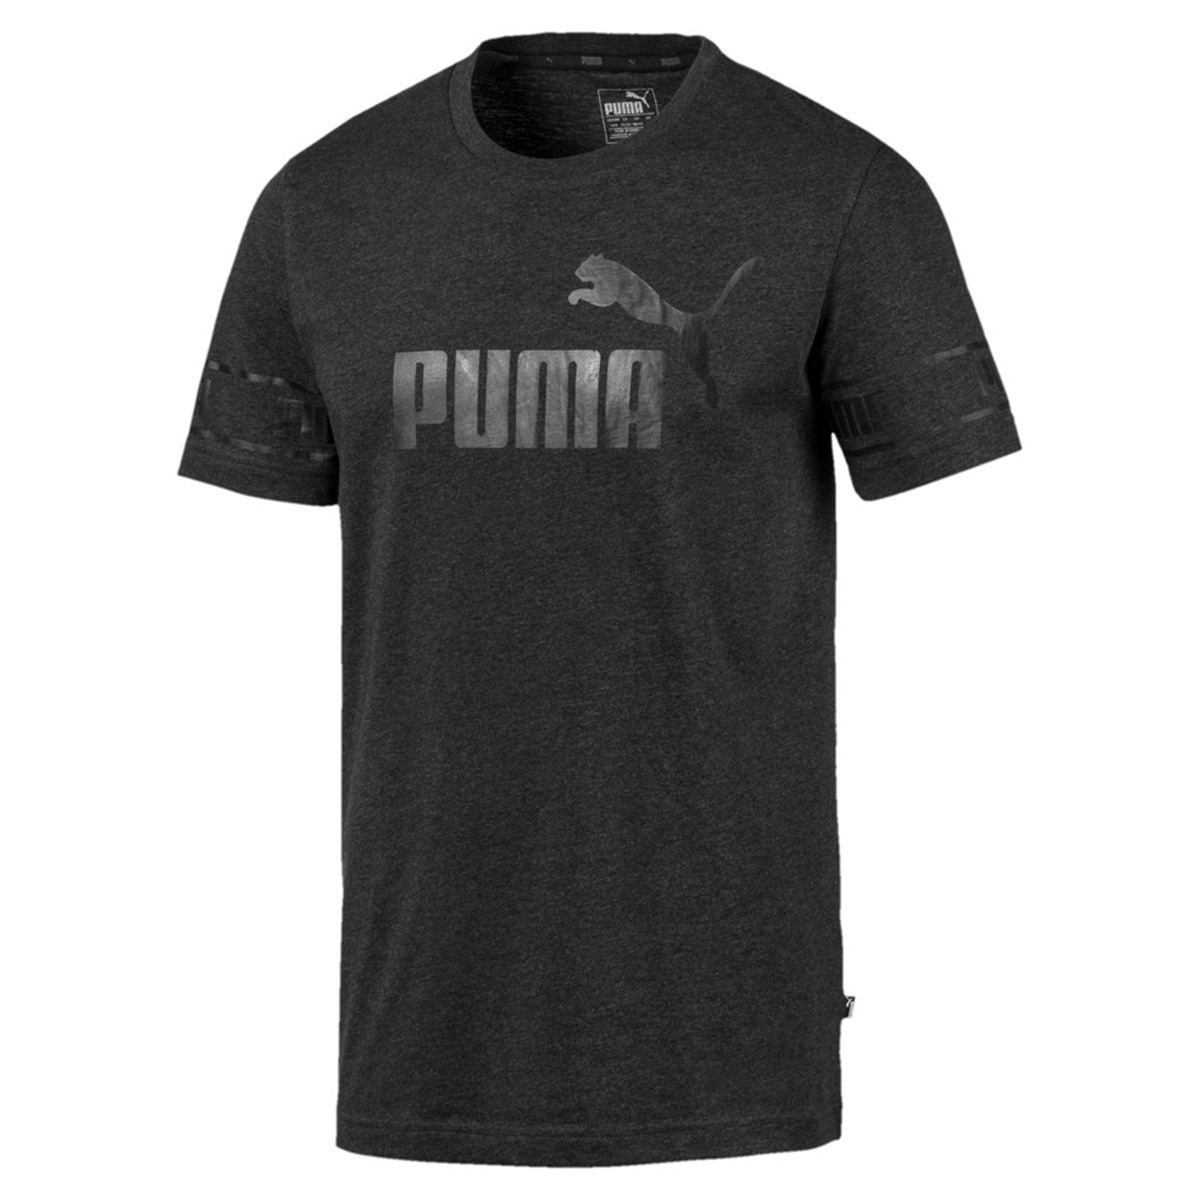 PUMA Herren Amplified Big Logo Tee T-Shirt 580426 07